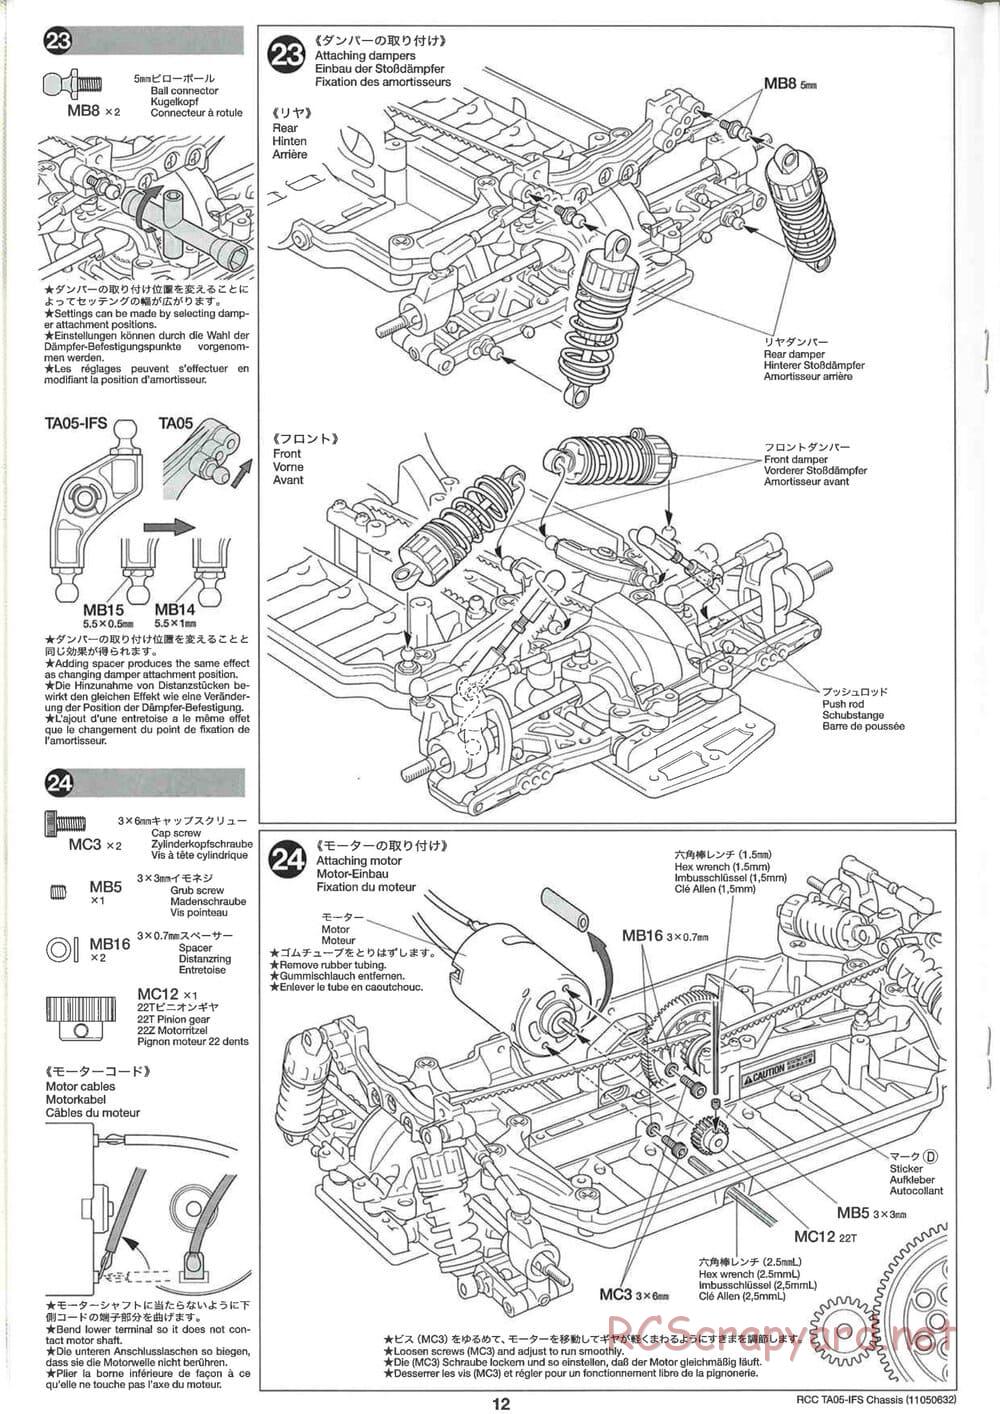 Tamiya - TA05-IFS Chassis - Manual - Page 12